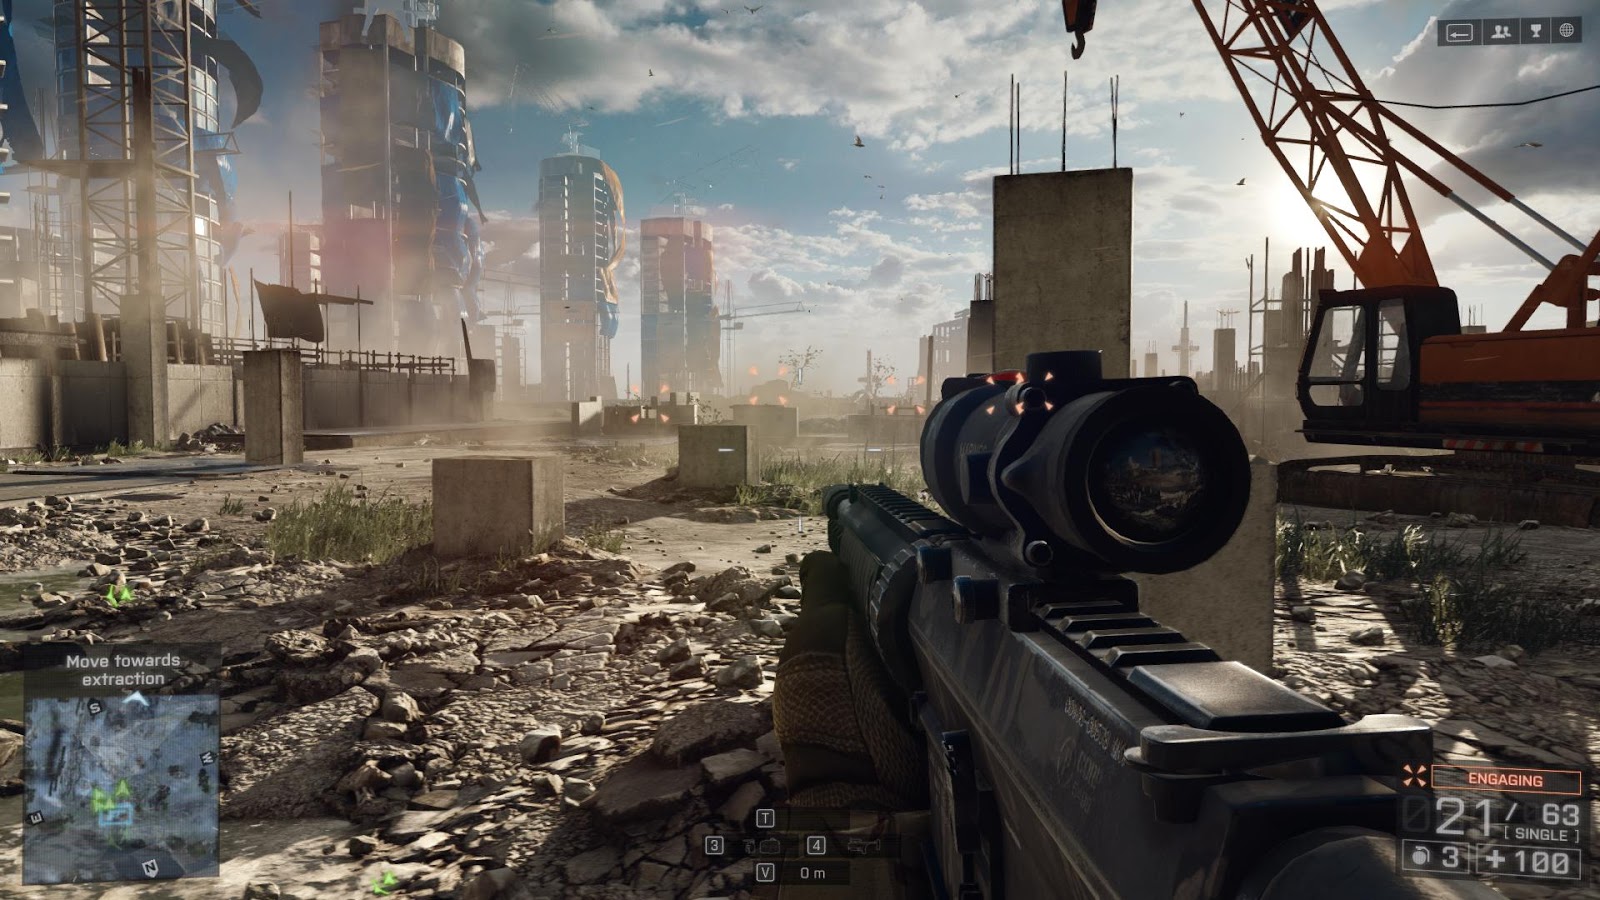 Requisitos para rodar Battlefield 4 surgem na internet - Critical Hits